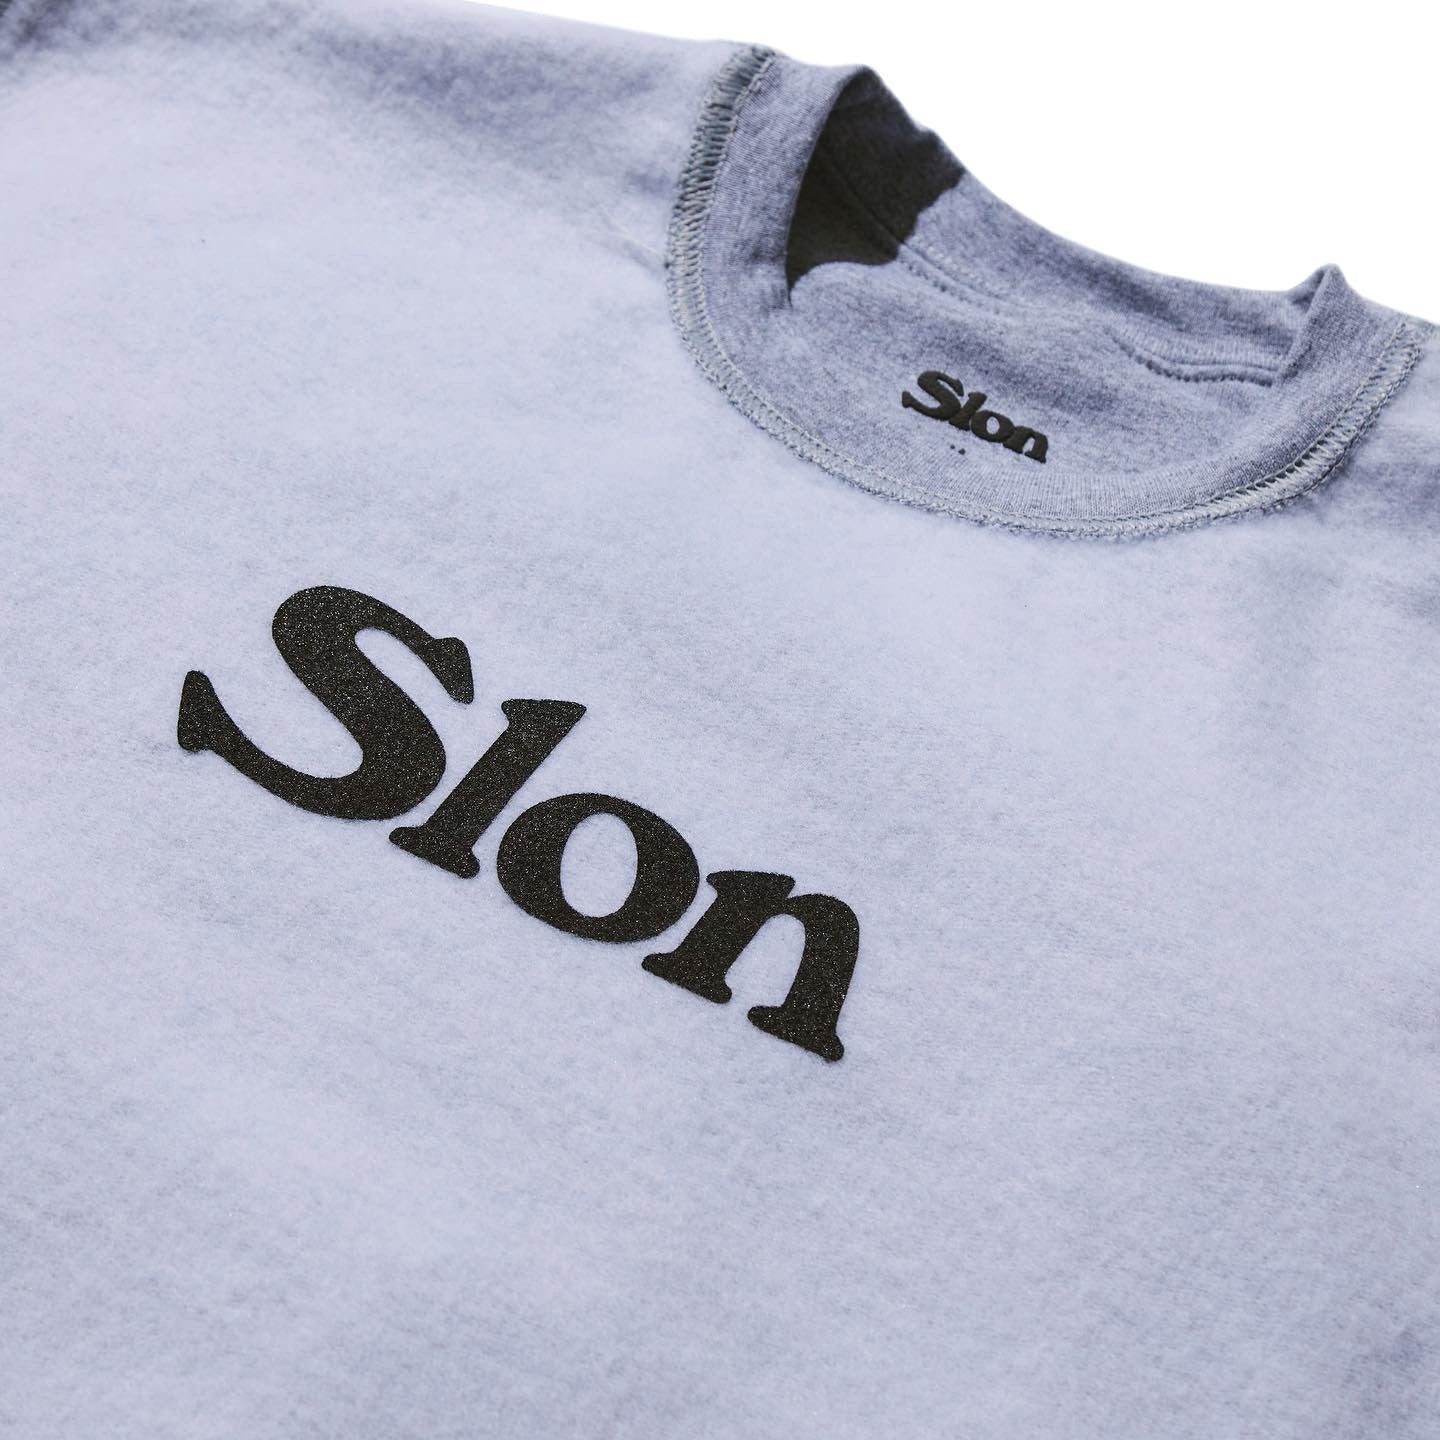 SLON Classic Logo Reversible Sweatshirt “Grey” – SLON STORE